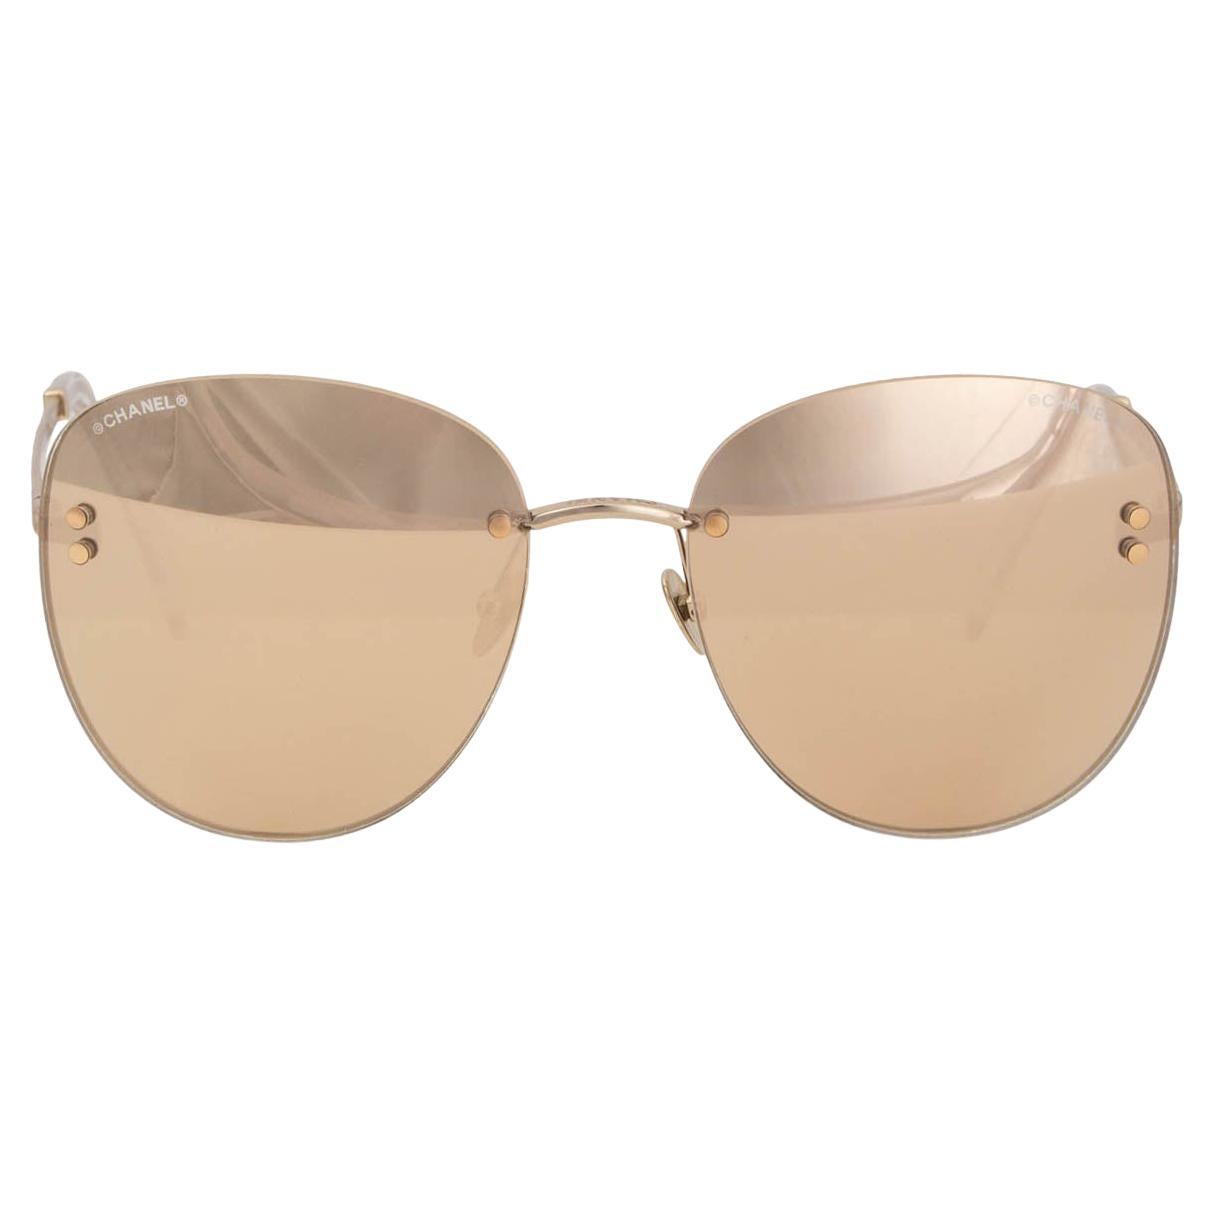 Chanel Gold Sunglasses